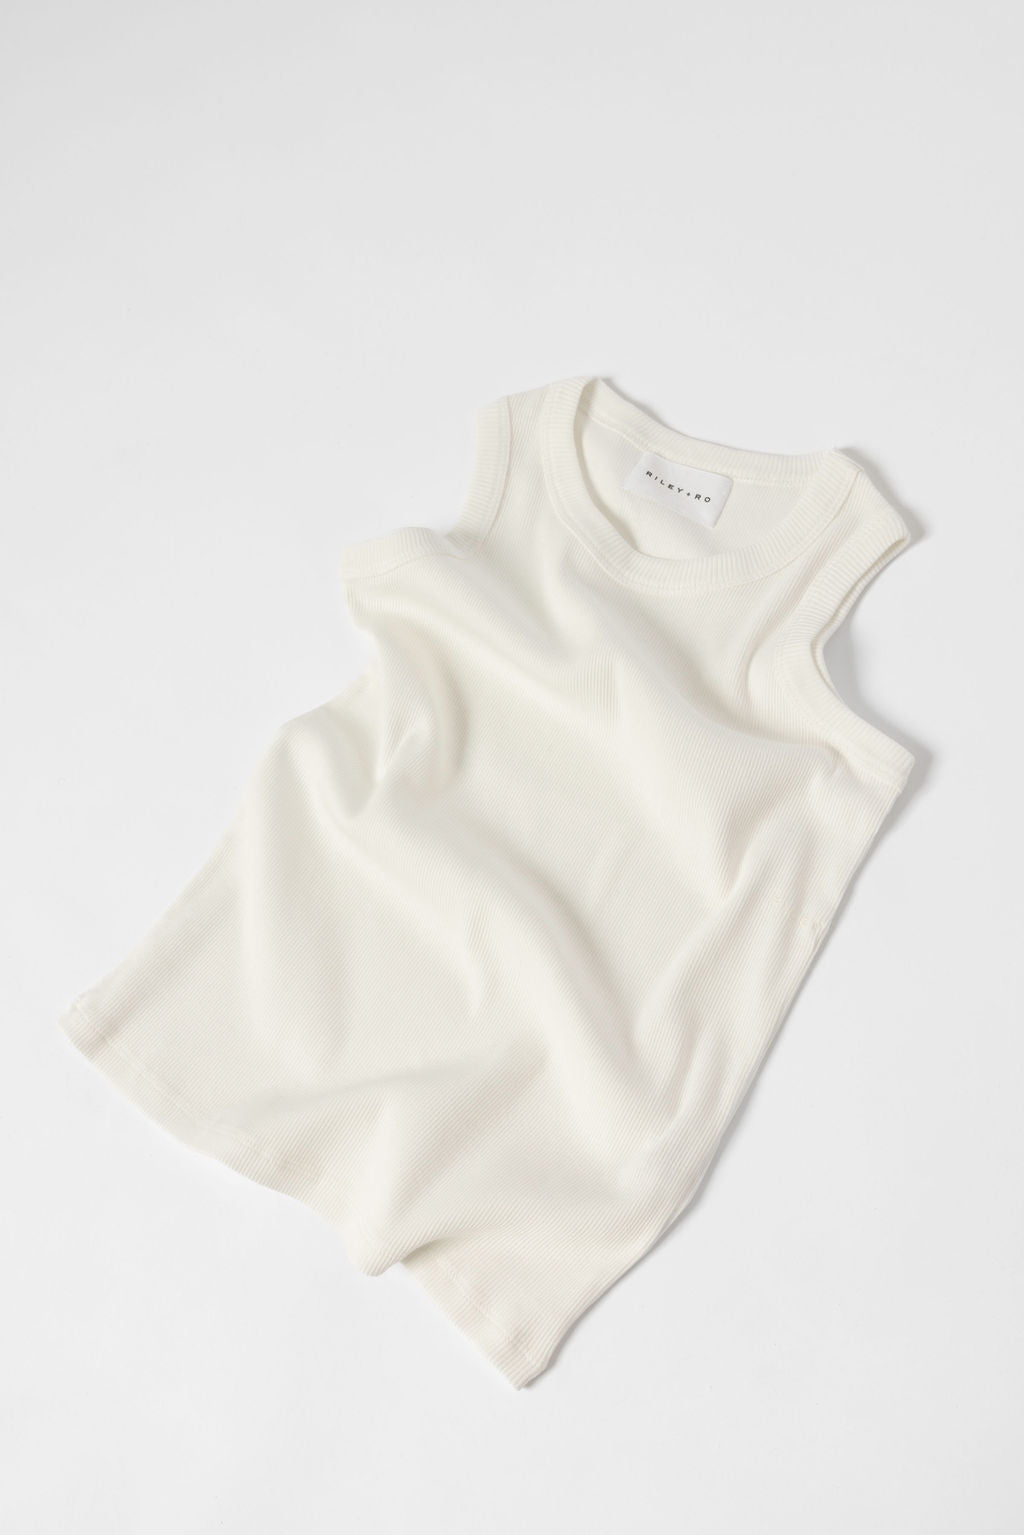 Minimalist Capsule Wardrobe 100% Organic Cotton Basic White Tank 